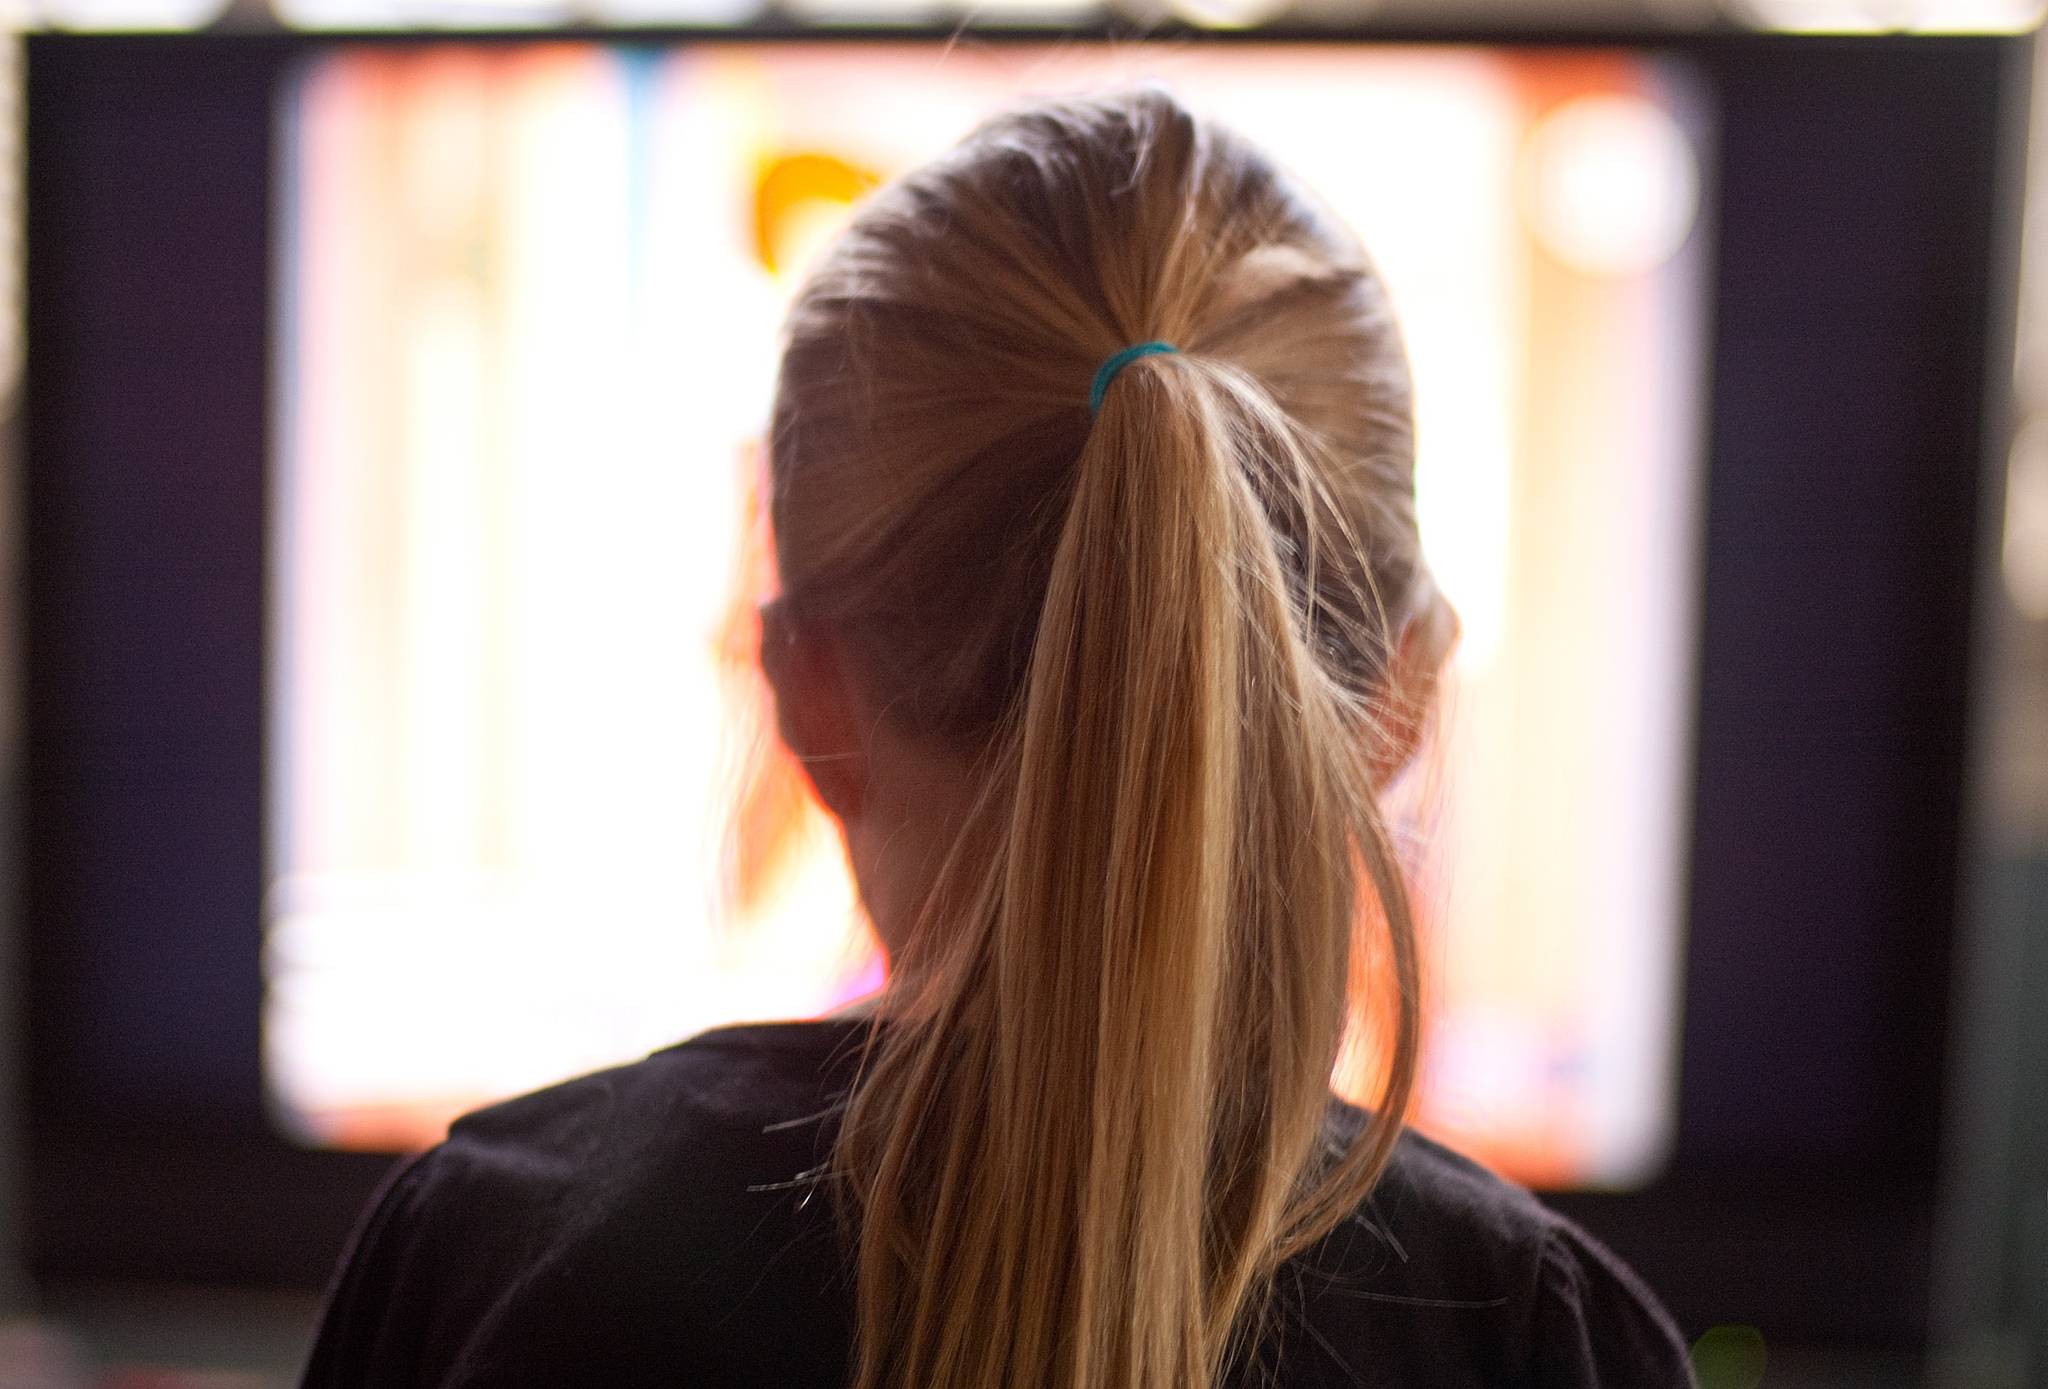 Quality beats quantity for internet TV bingers